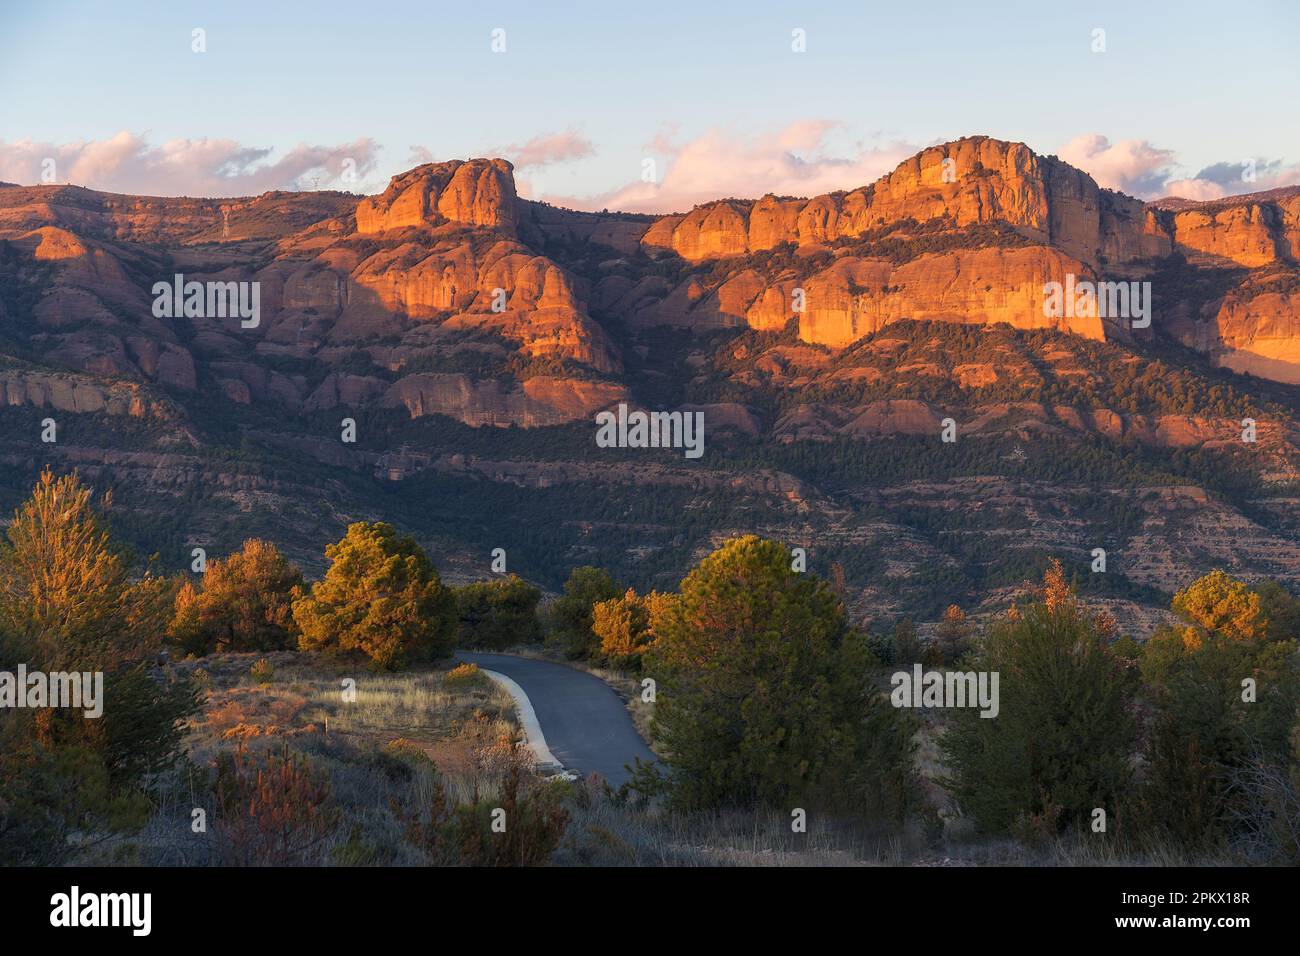 Catena montuosa Rocs de Queralt al tramonto a Pallars Jussa, Catalogna Foto Stock